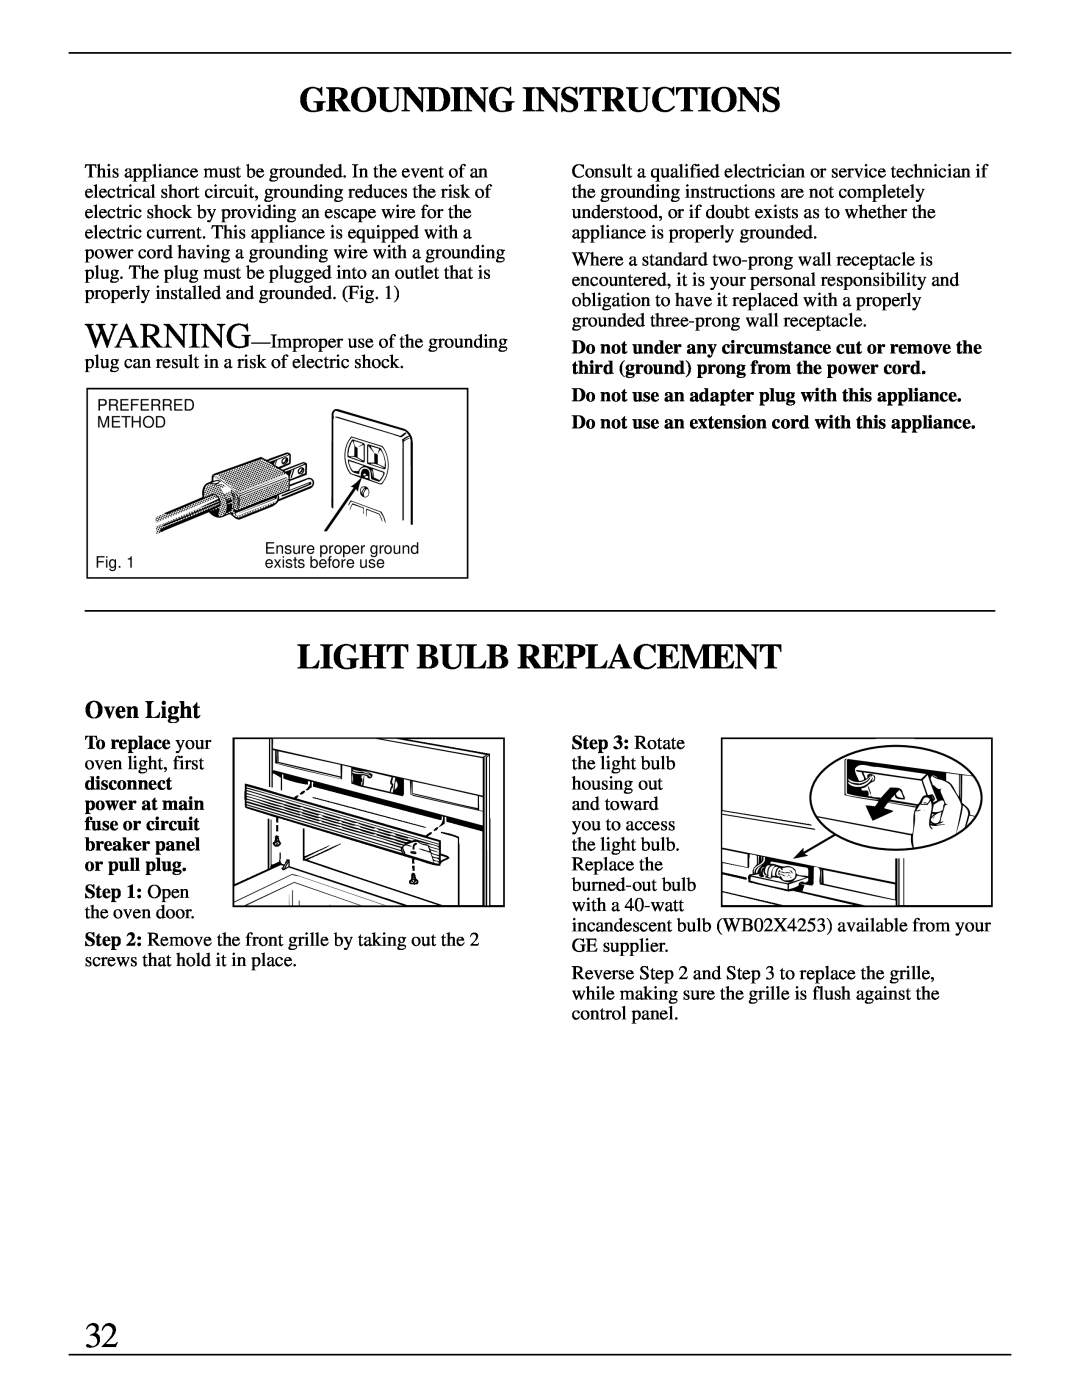 GE Monogram ZMC1090 Series manual Grounding Instructions, Light Bulb Replacement, Oven Light 